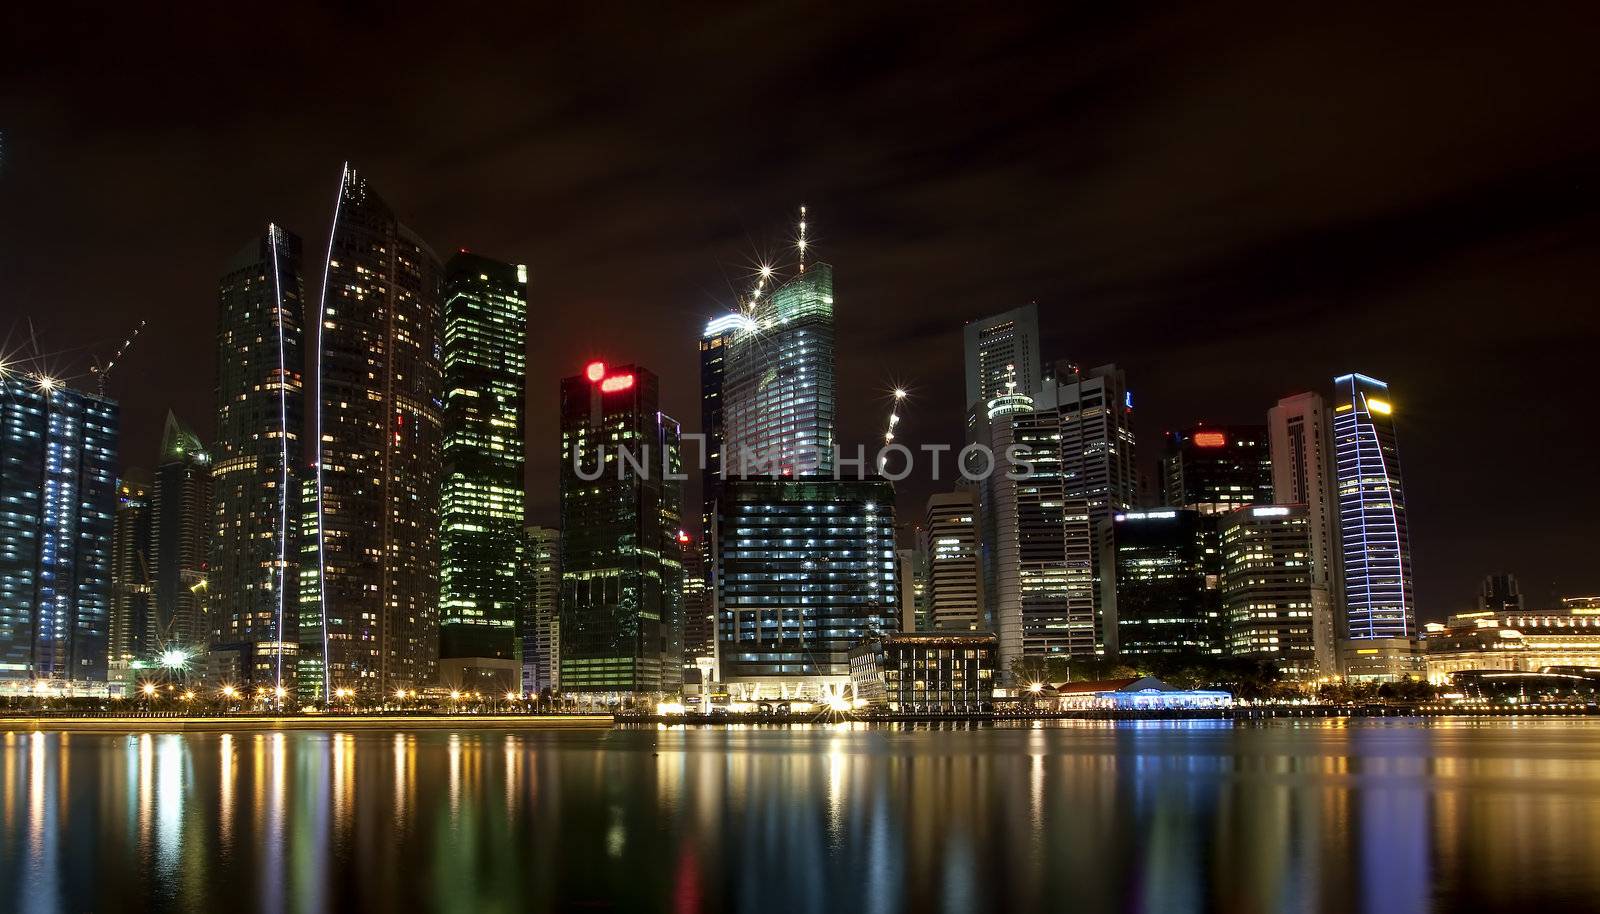 Singapore skyline by kjorgen